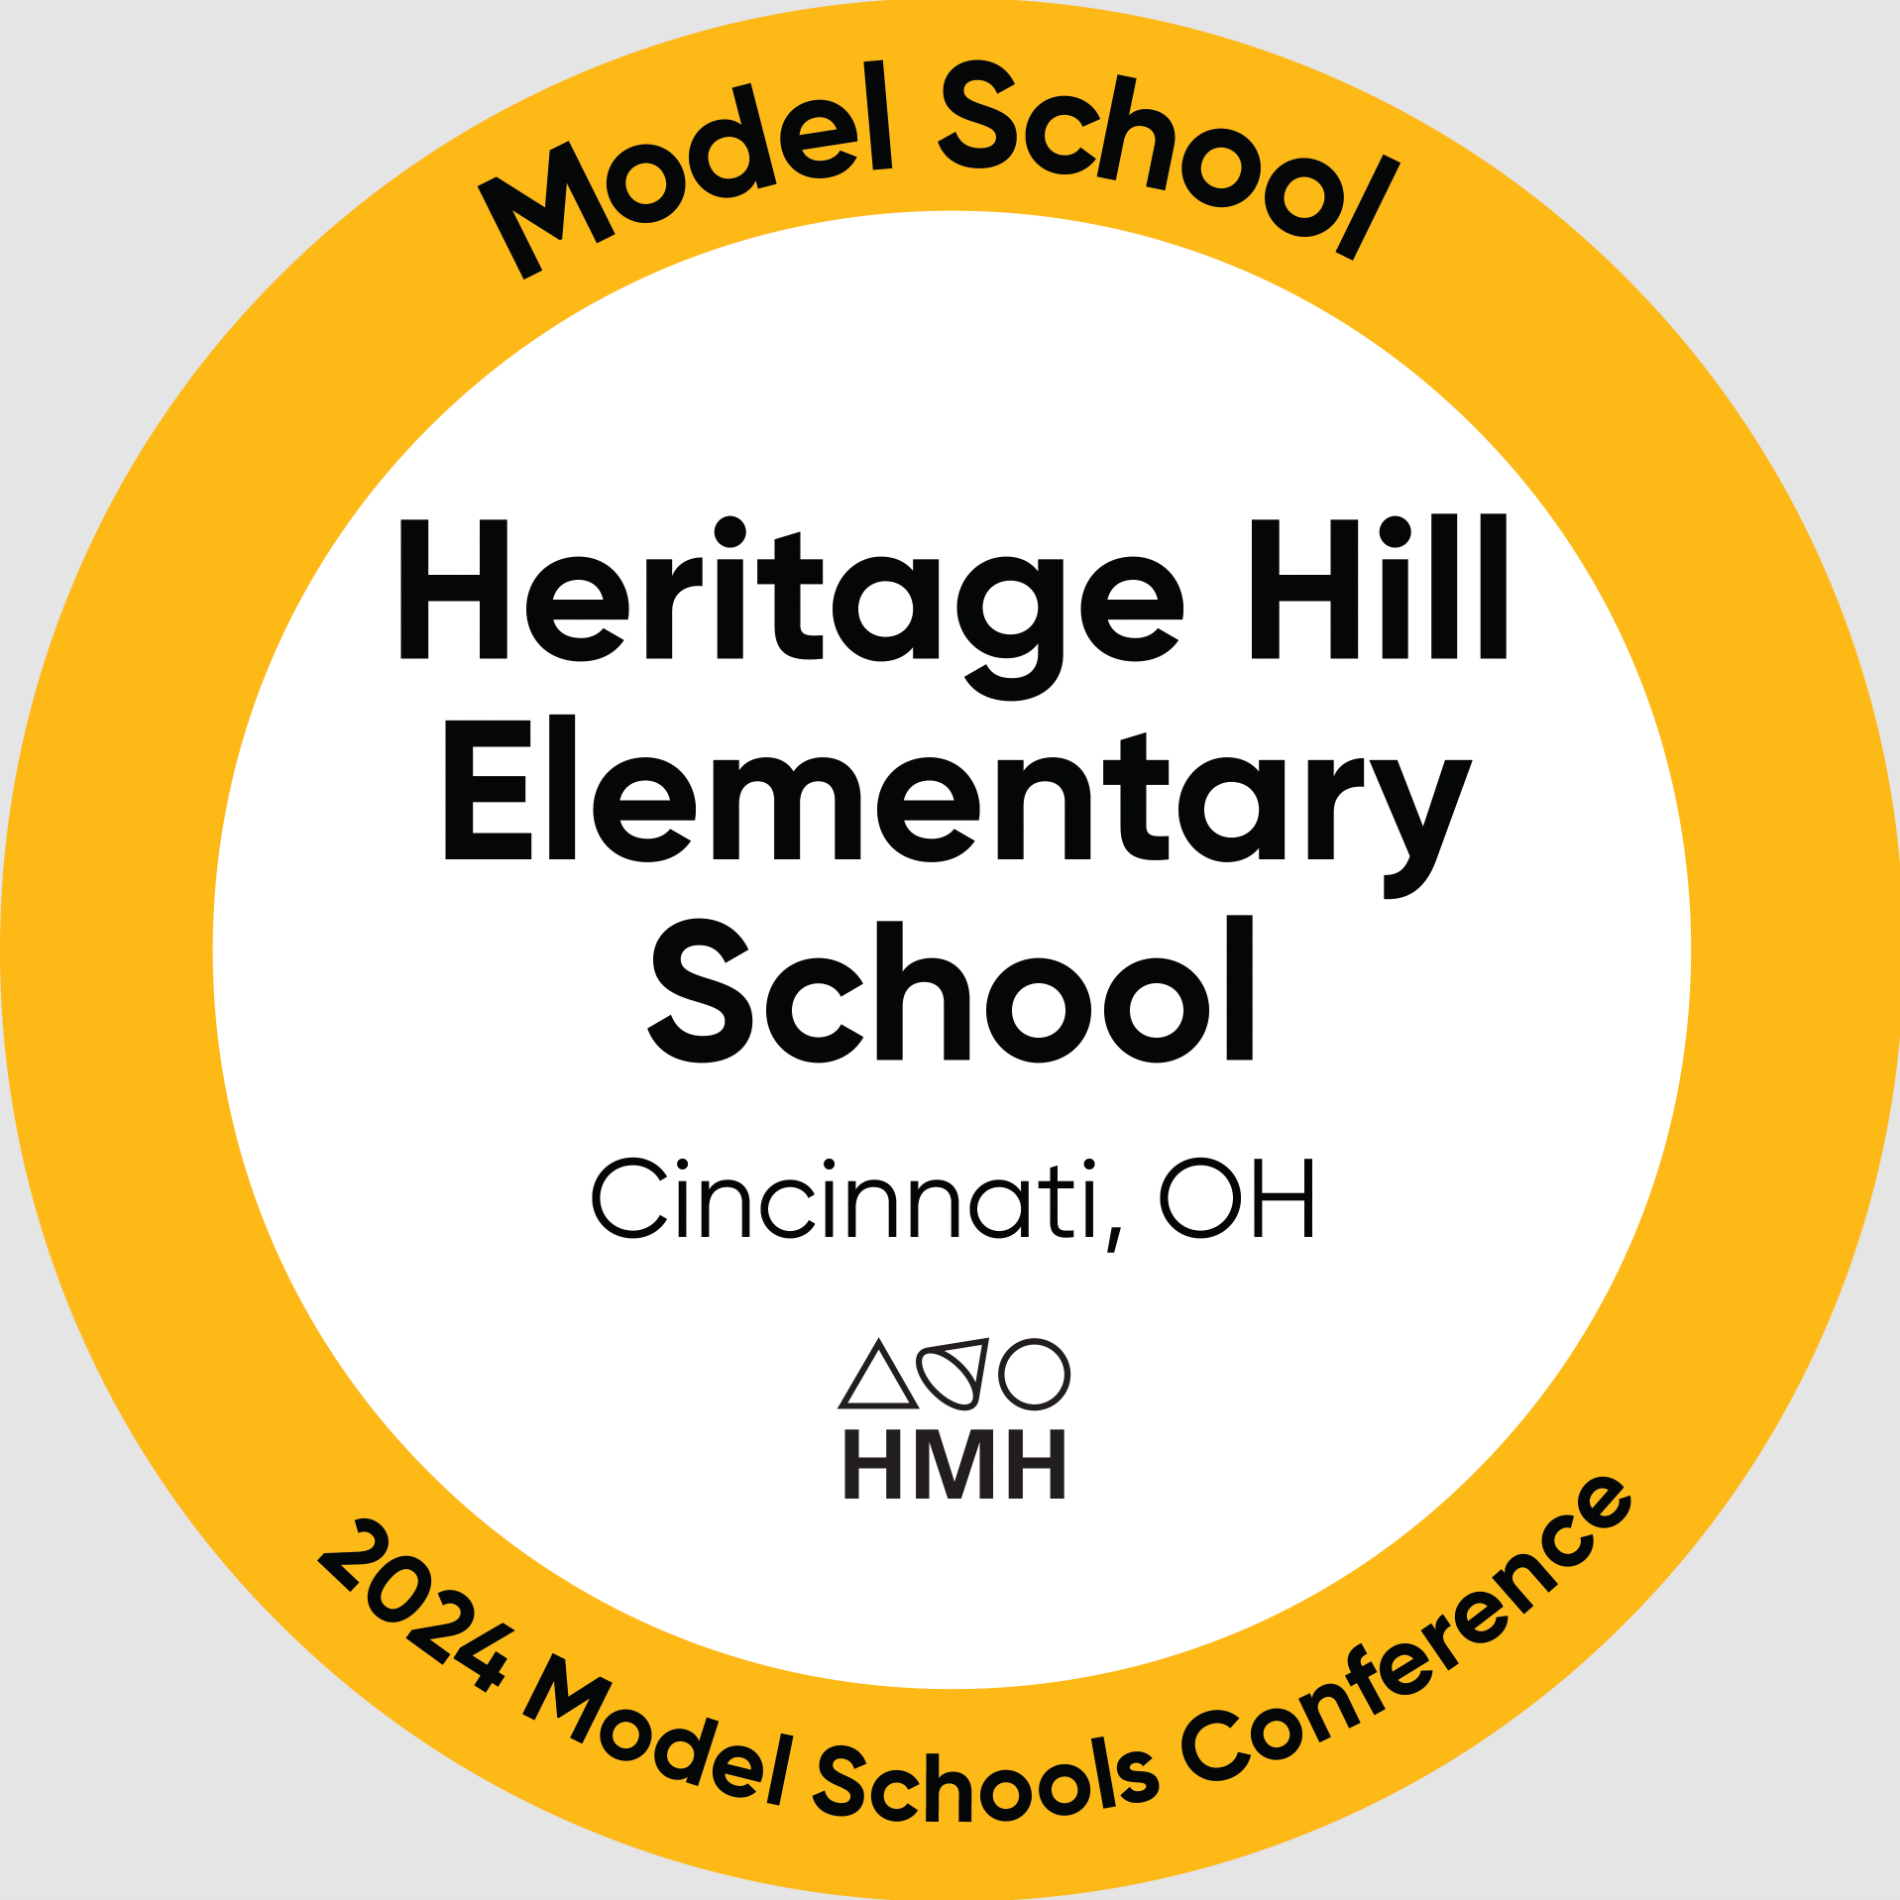 Model School Heritage Hill Elementary School Cincinnati, OH HMH 2024 Model Schools Conference